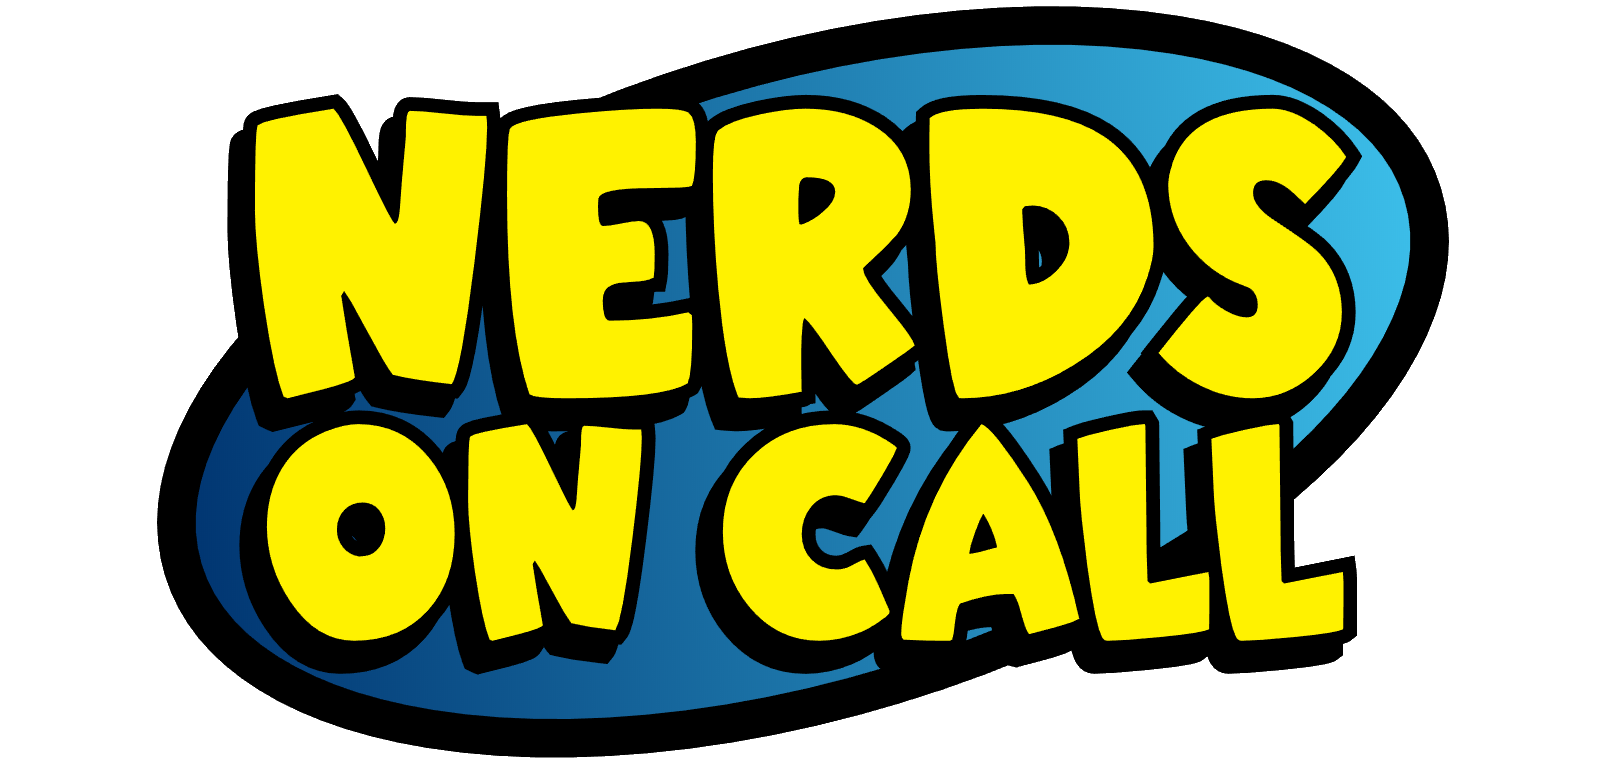 Nerds On Call Logo